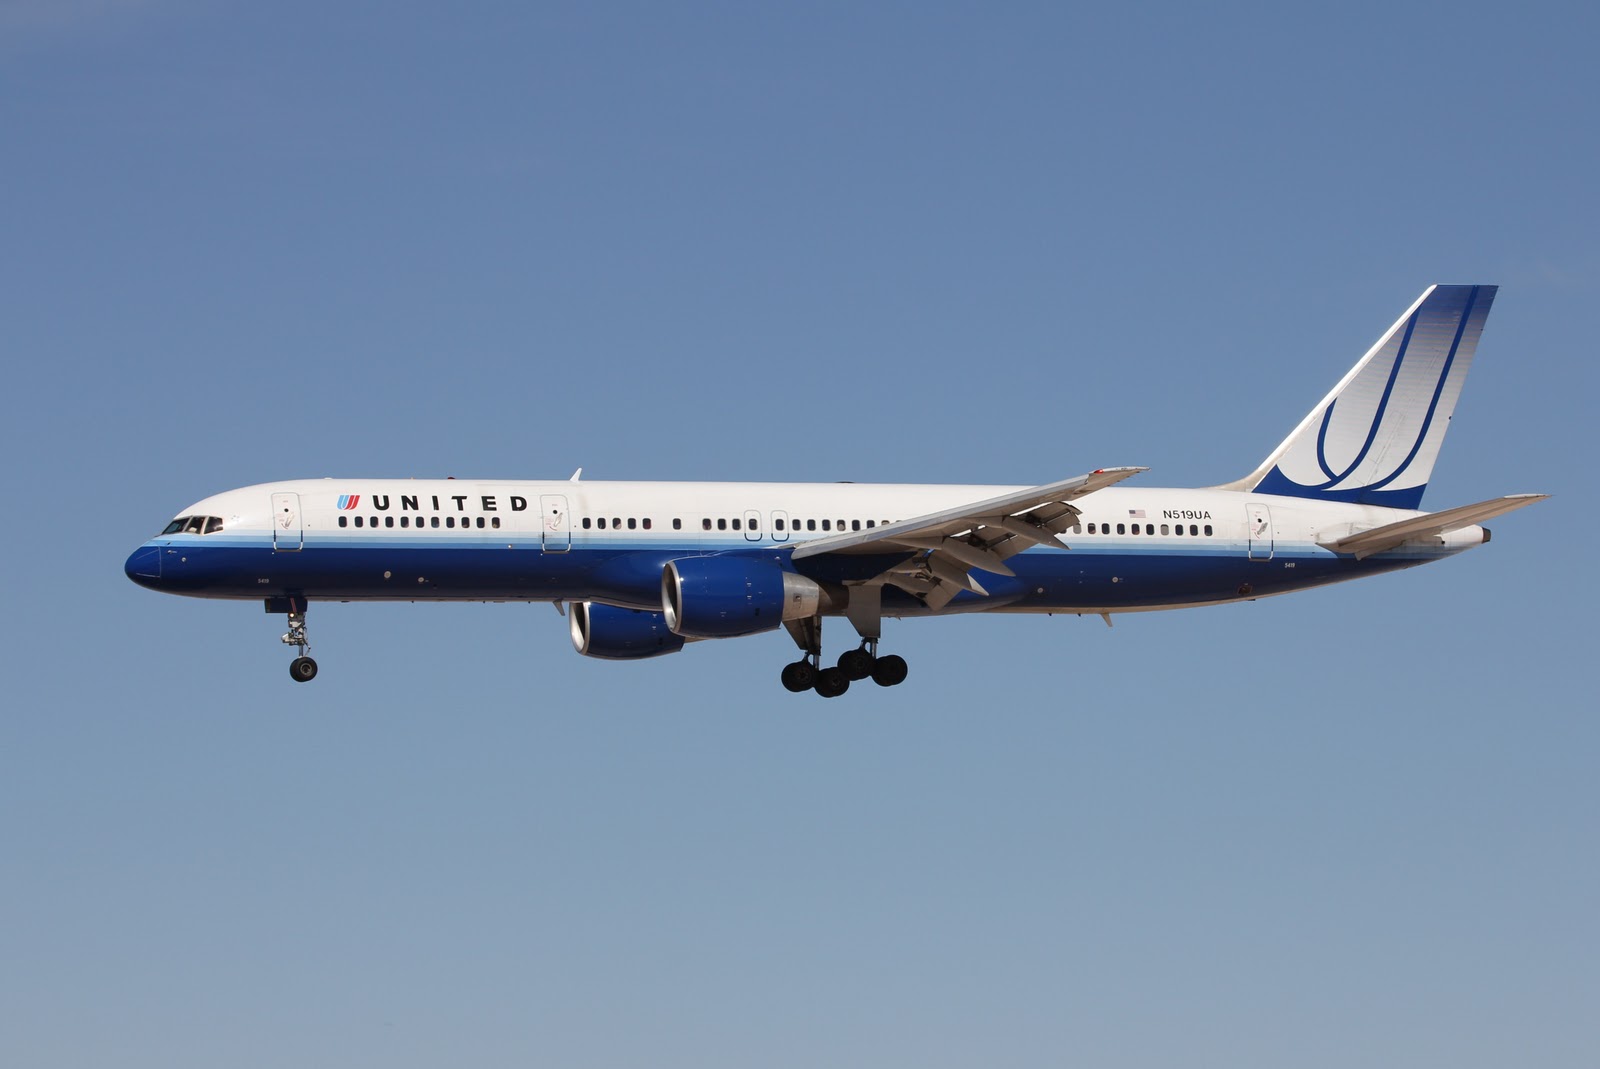 N67134 - United Airlines Boeing 757-200 at San Francisco Intl | Photo ID 1046387 | Airplane ...